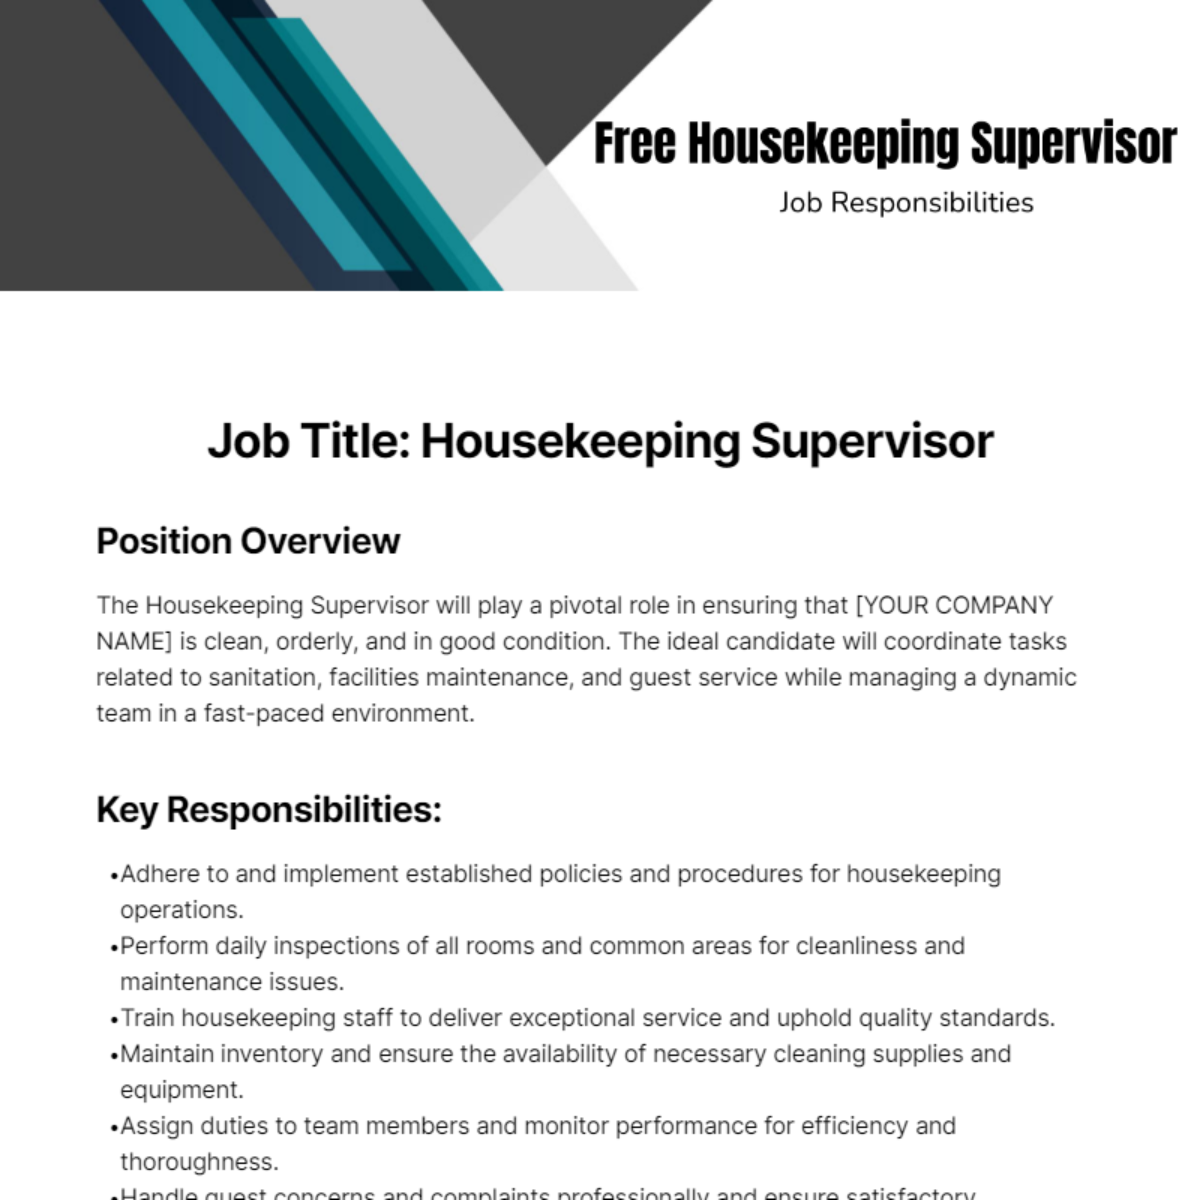 Free Housekeeping Supervisor Job Responsibilities Template